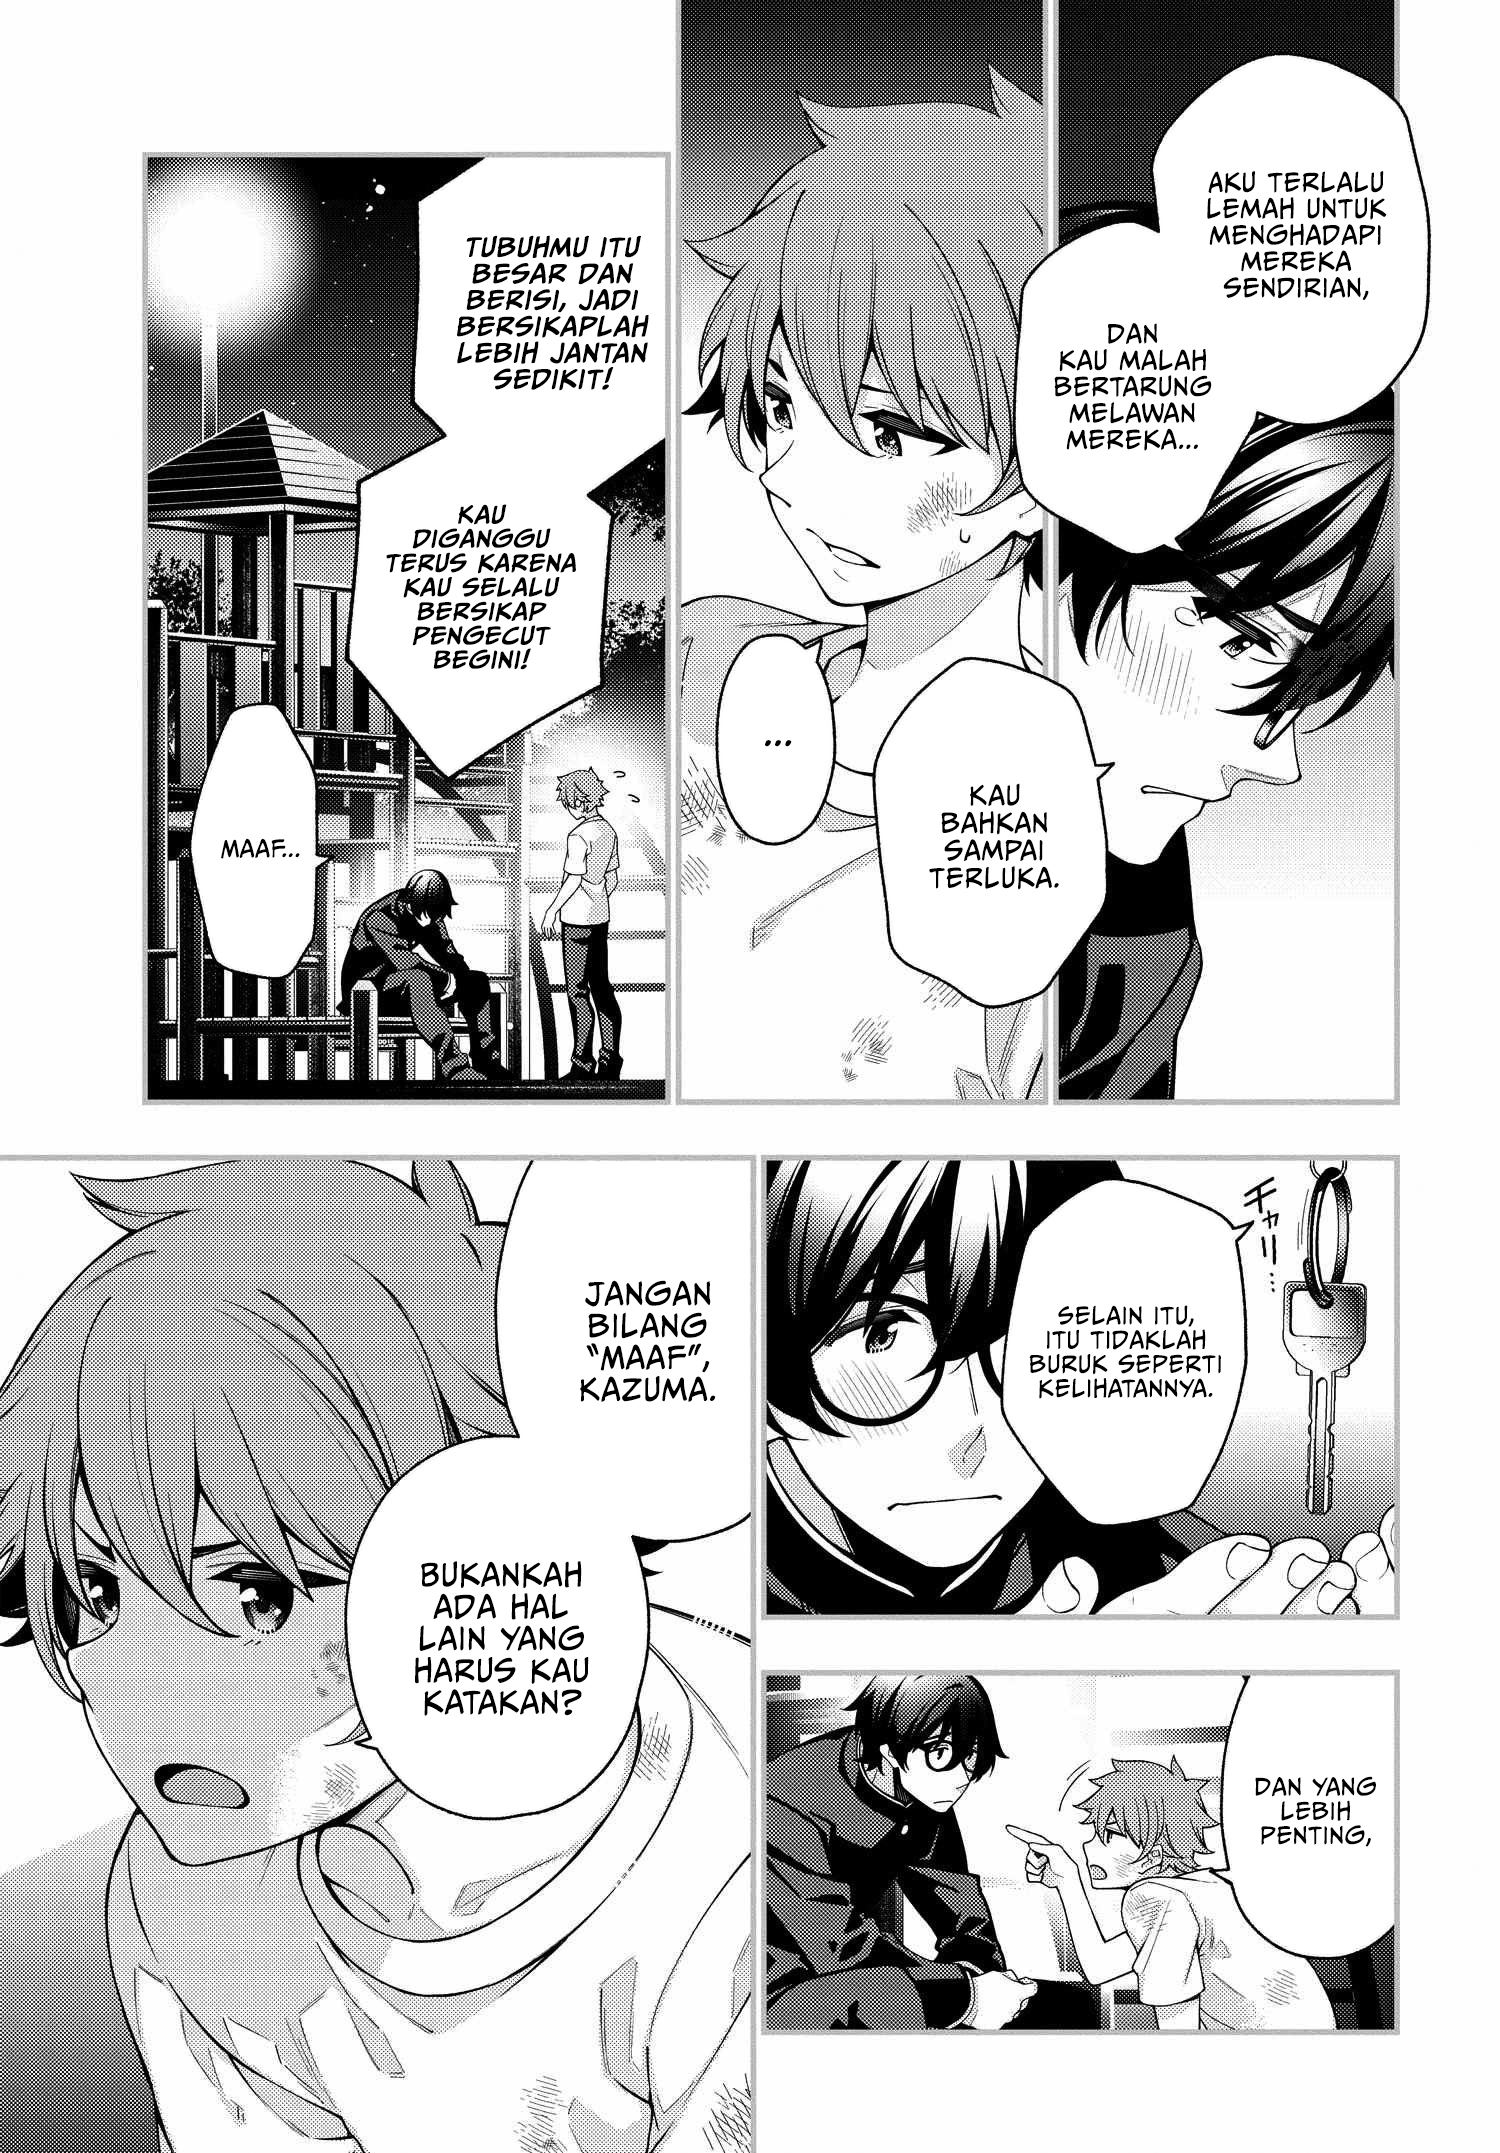 Spoiler Manga A Choice of Boyfriend and Girlfriend 4